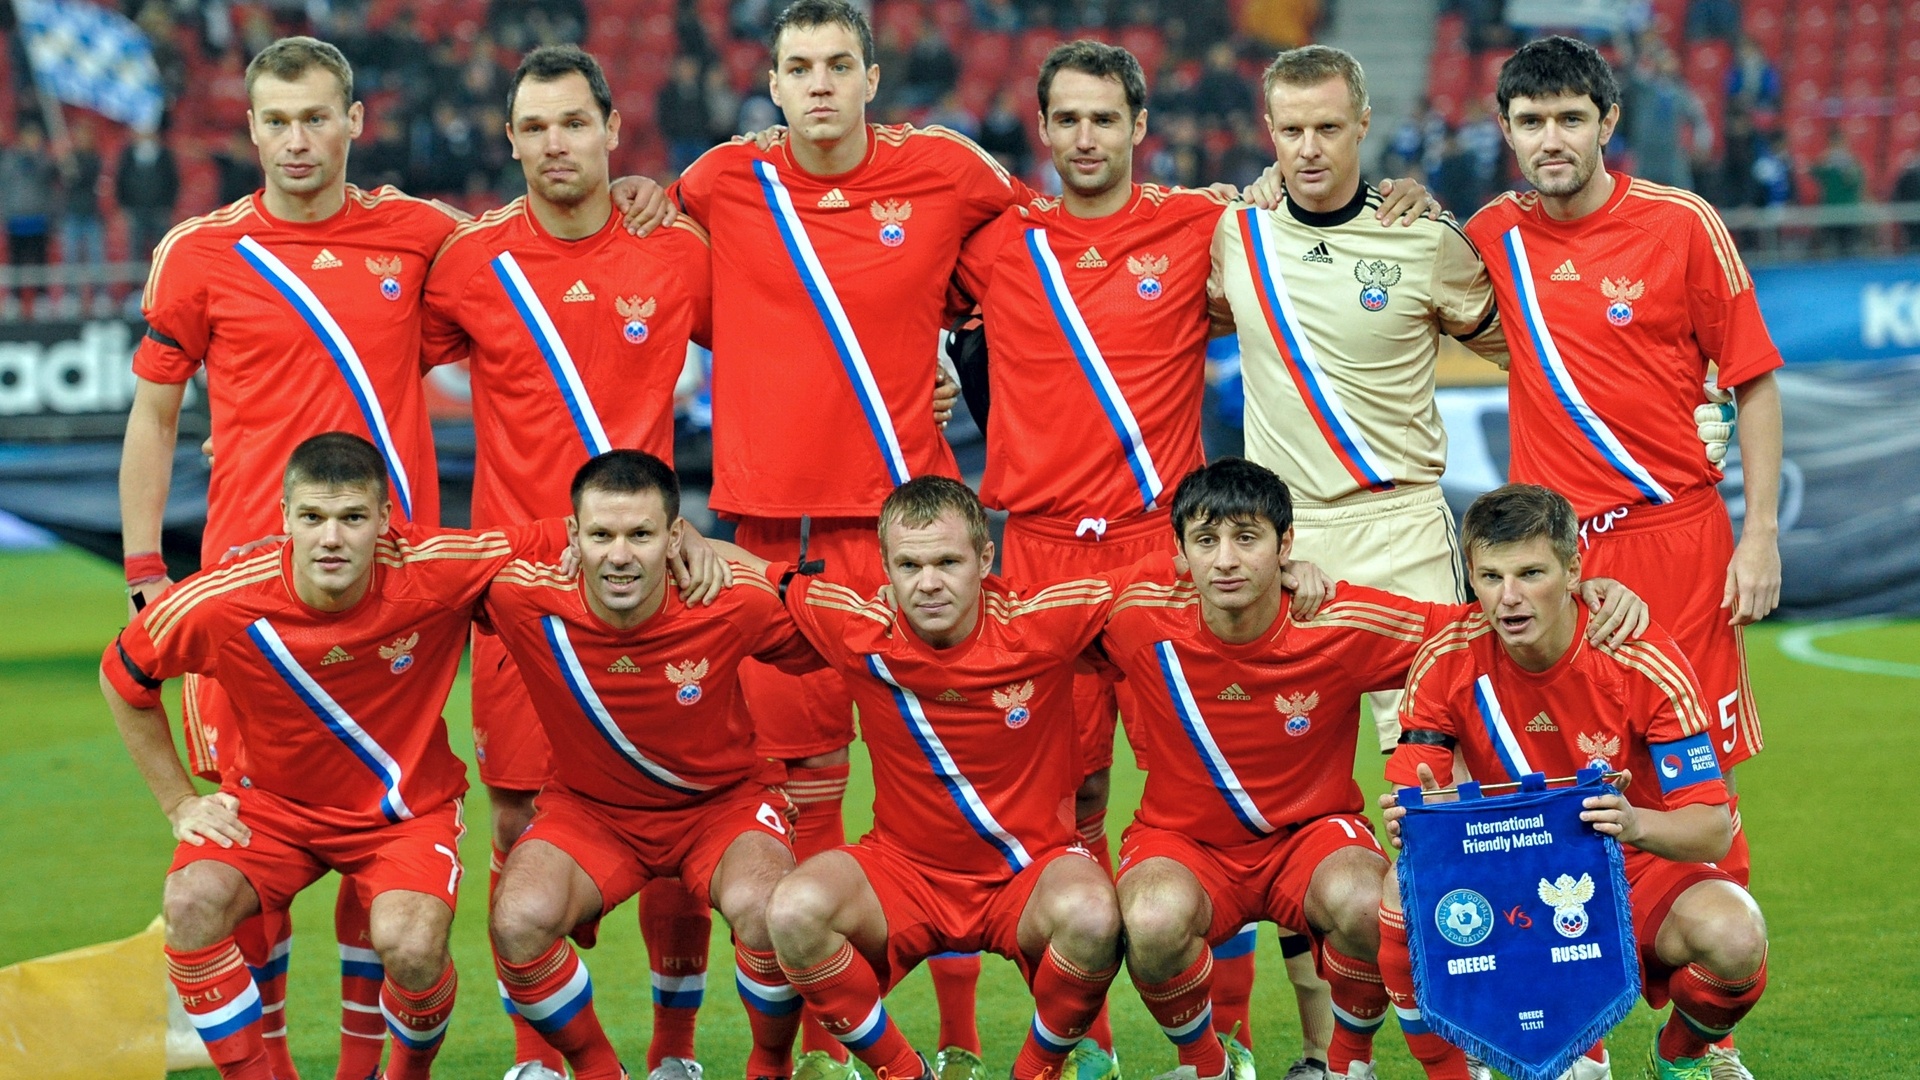 Netherlands national team, Football fever, Team spirit, Dutch pride, 1920x1080 Full HD Desktop